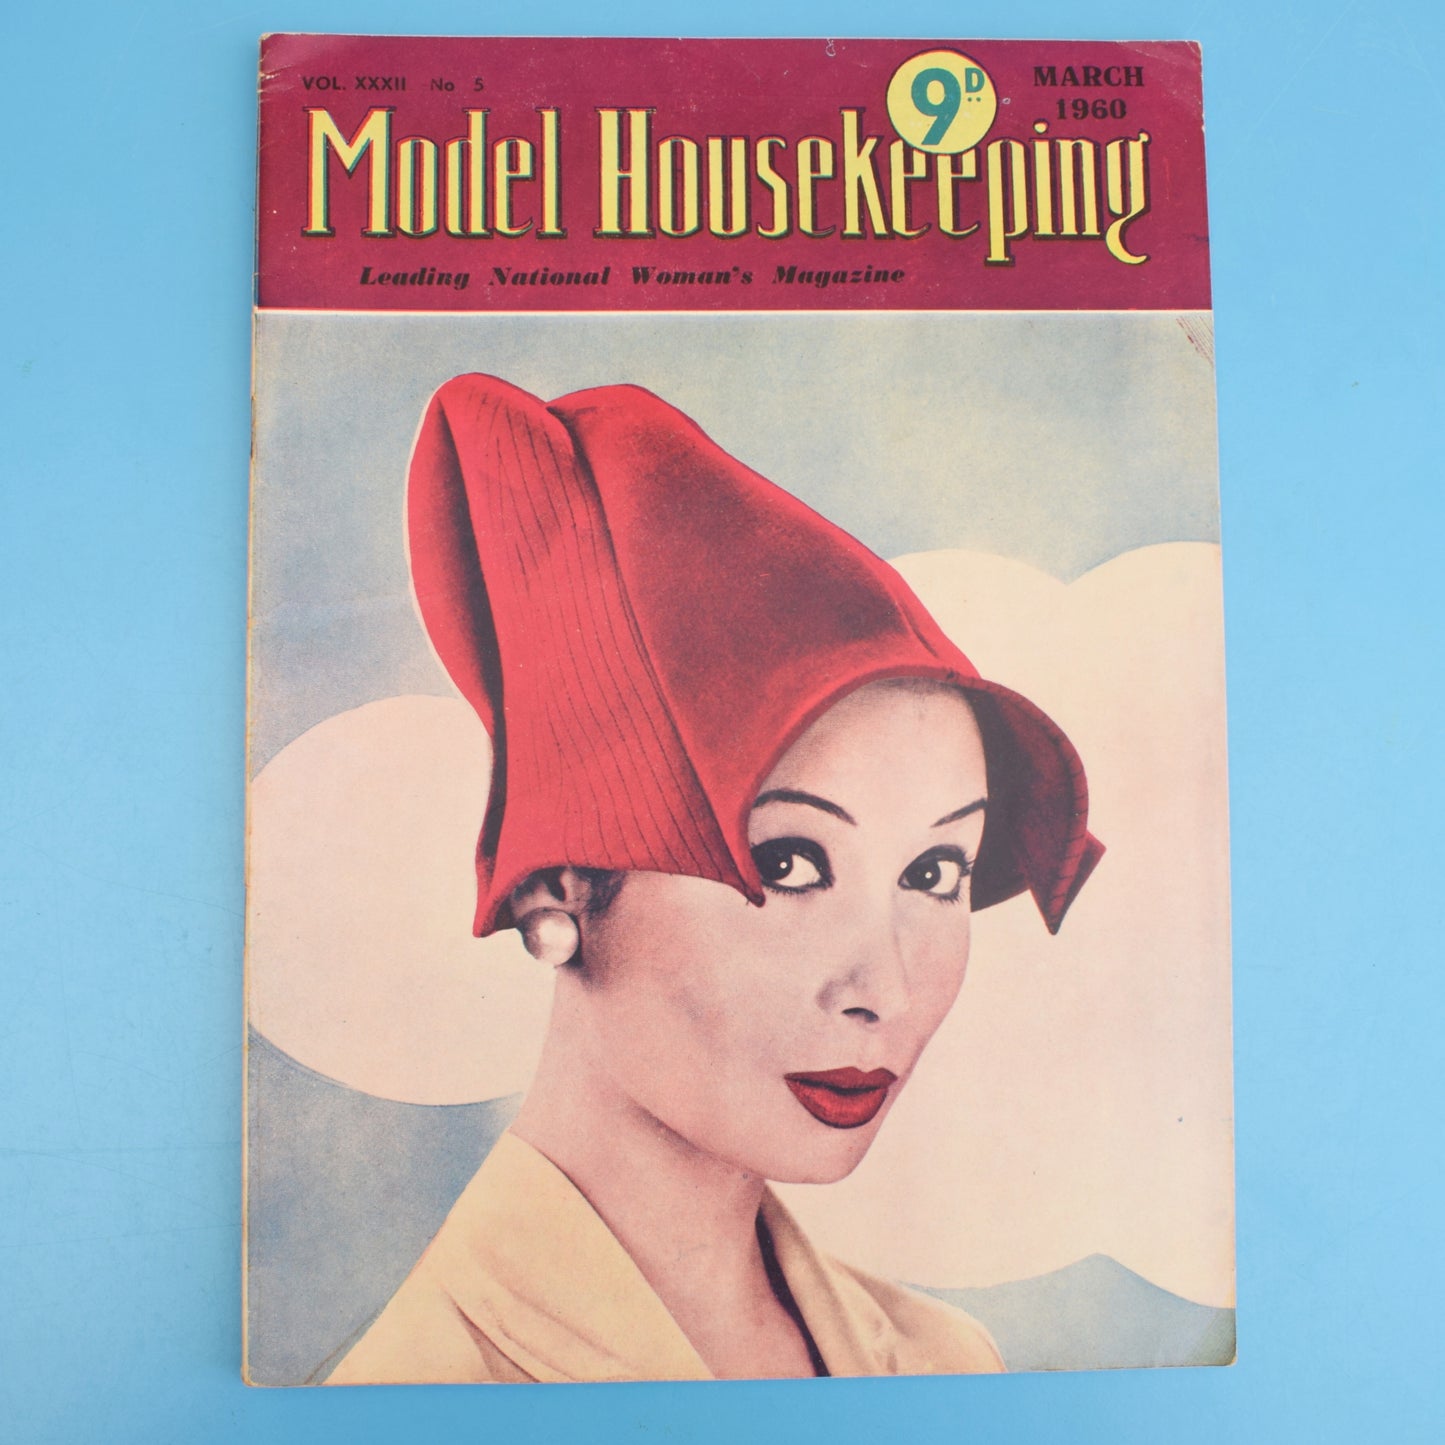 Vintage 1960s Model Housekeeping Magazine